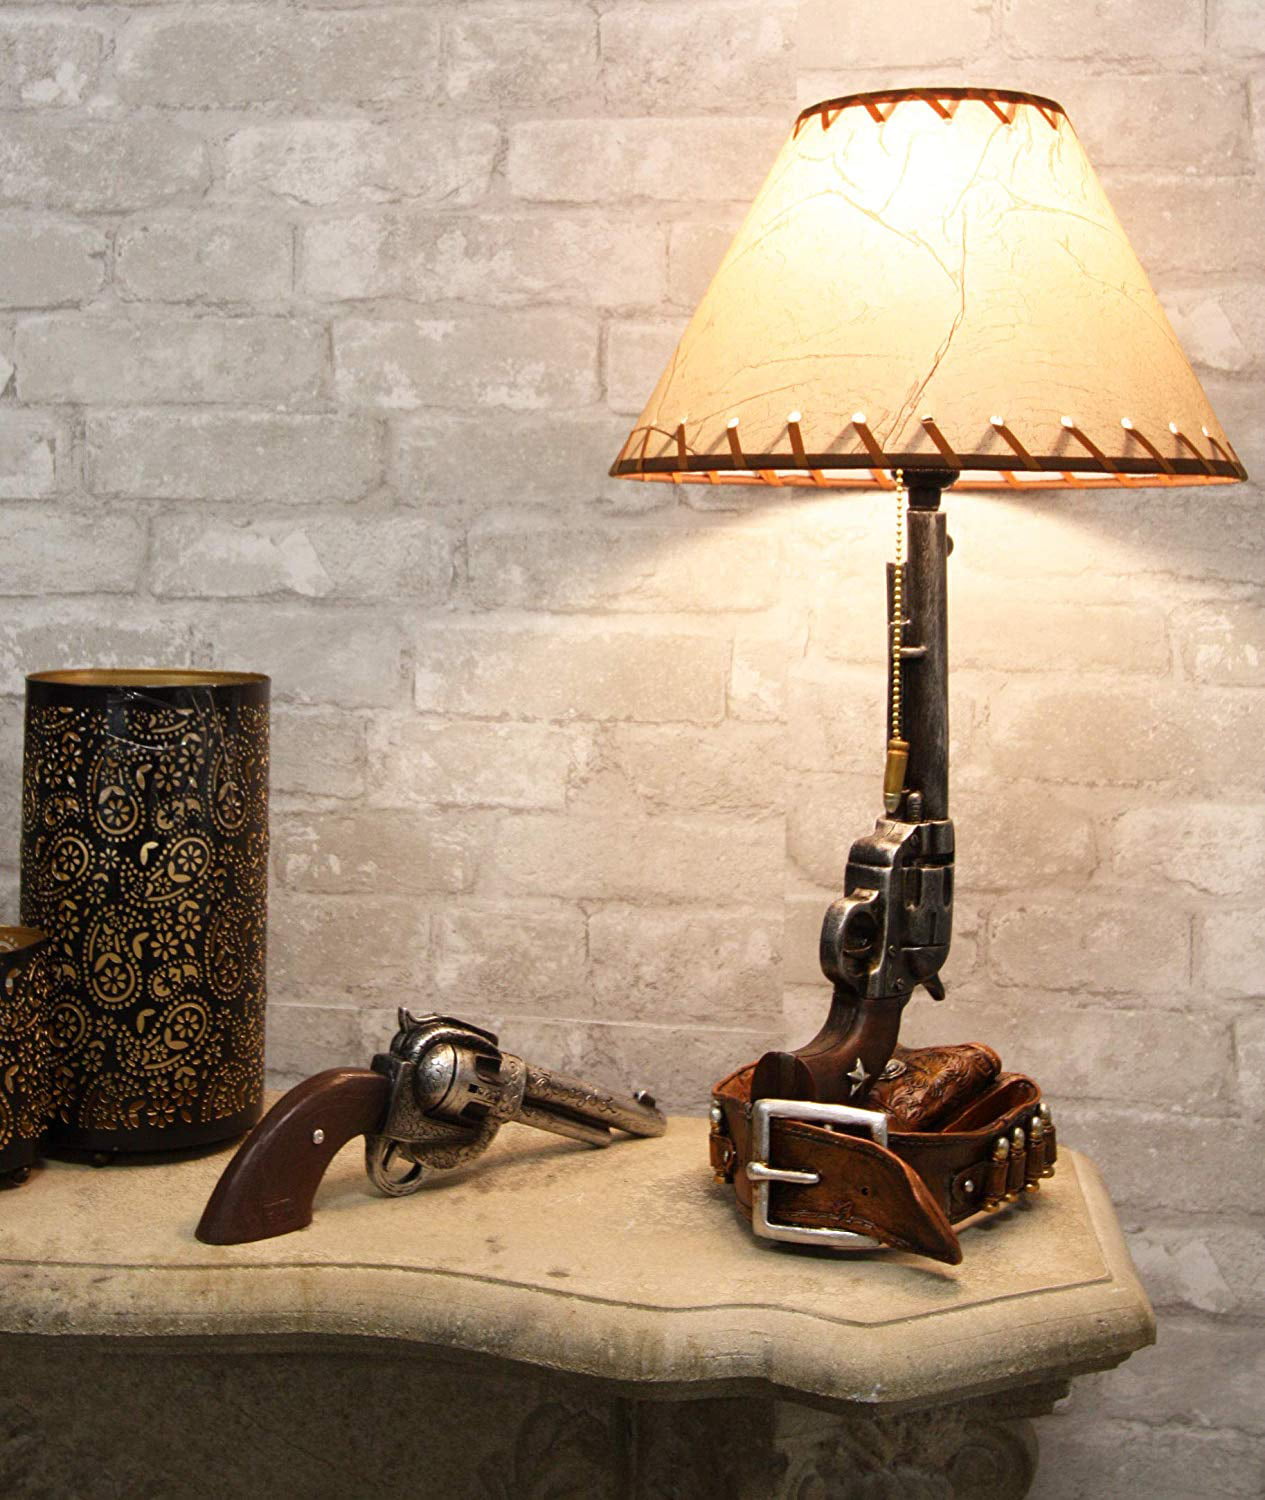 Ebros Western Six Shooter Revolver Gun Desktop Bedside Table Lamp with Shade 